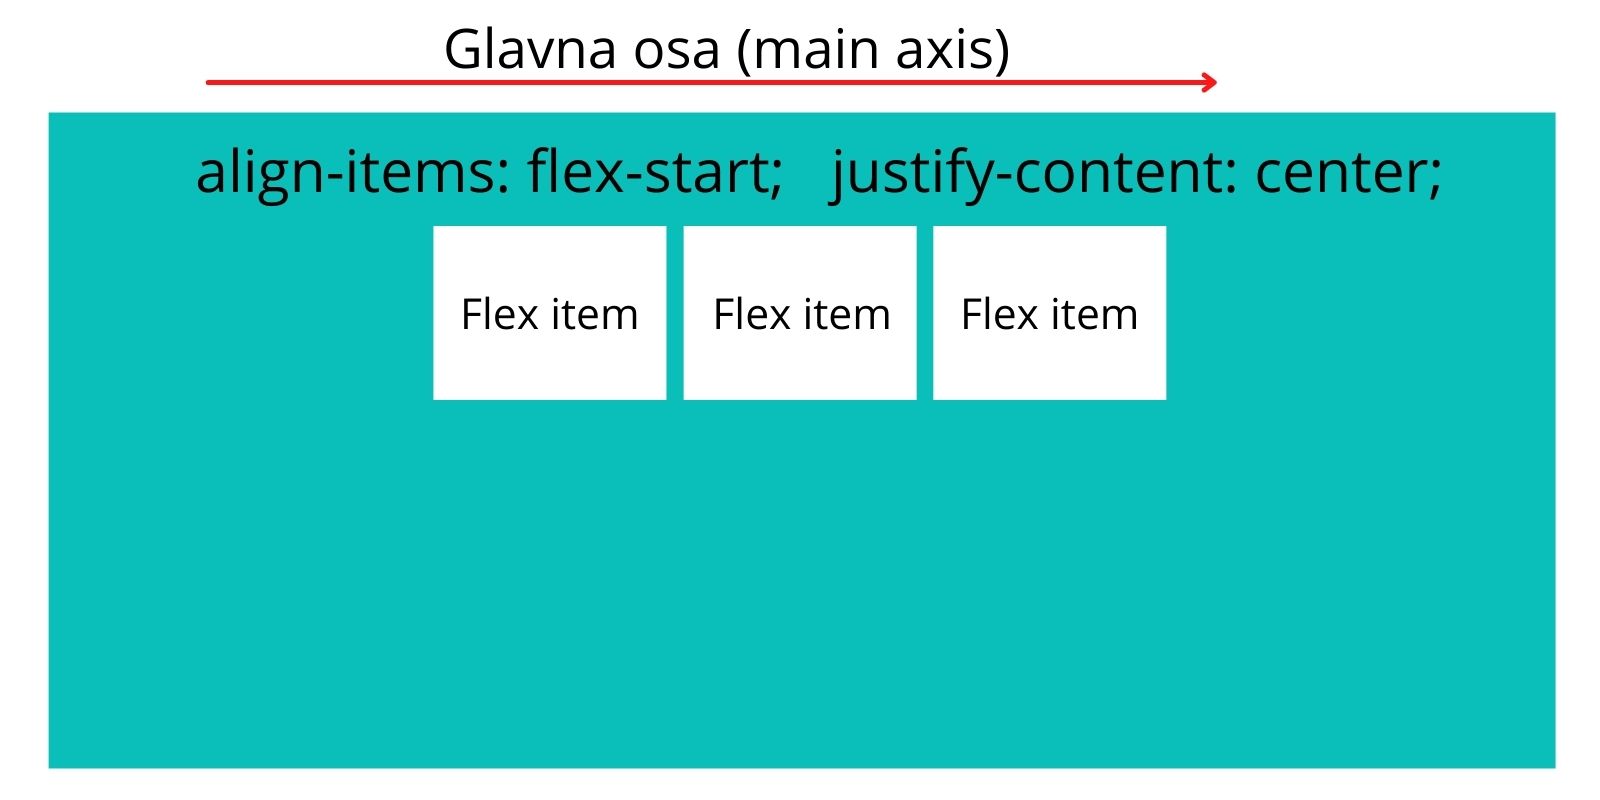 aligne items flex start